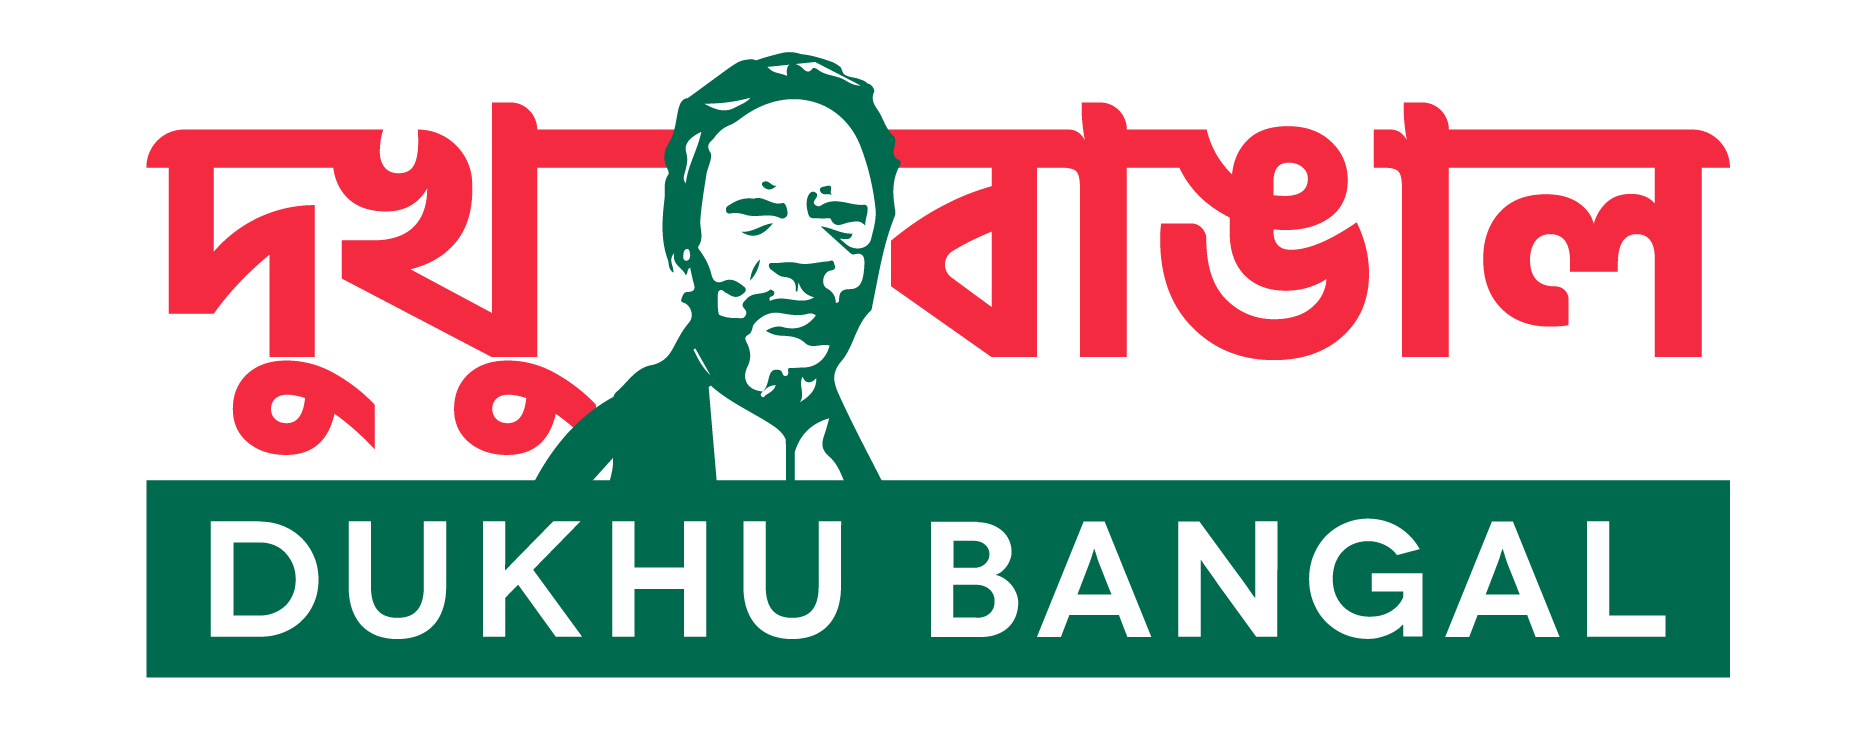 dukhu_bangal_logo